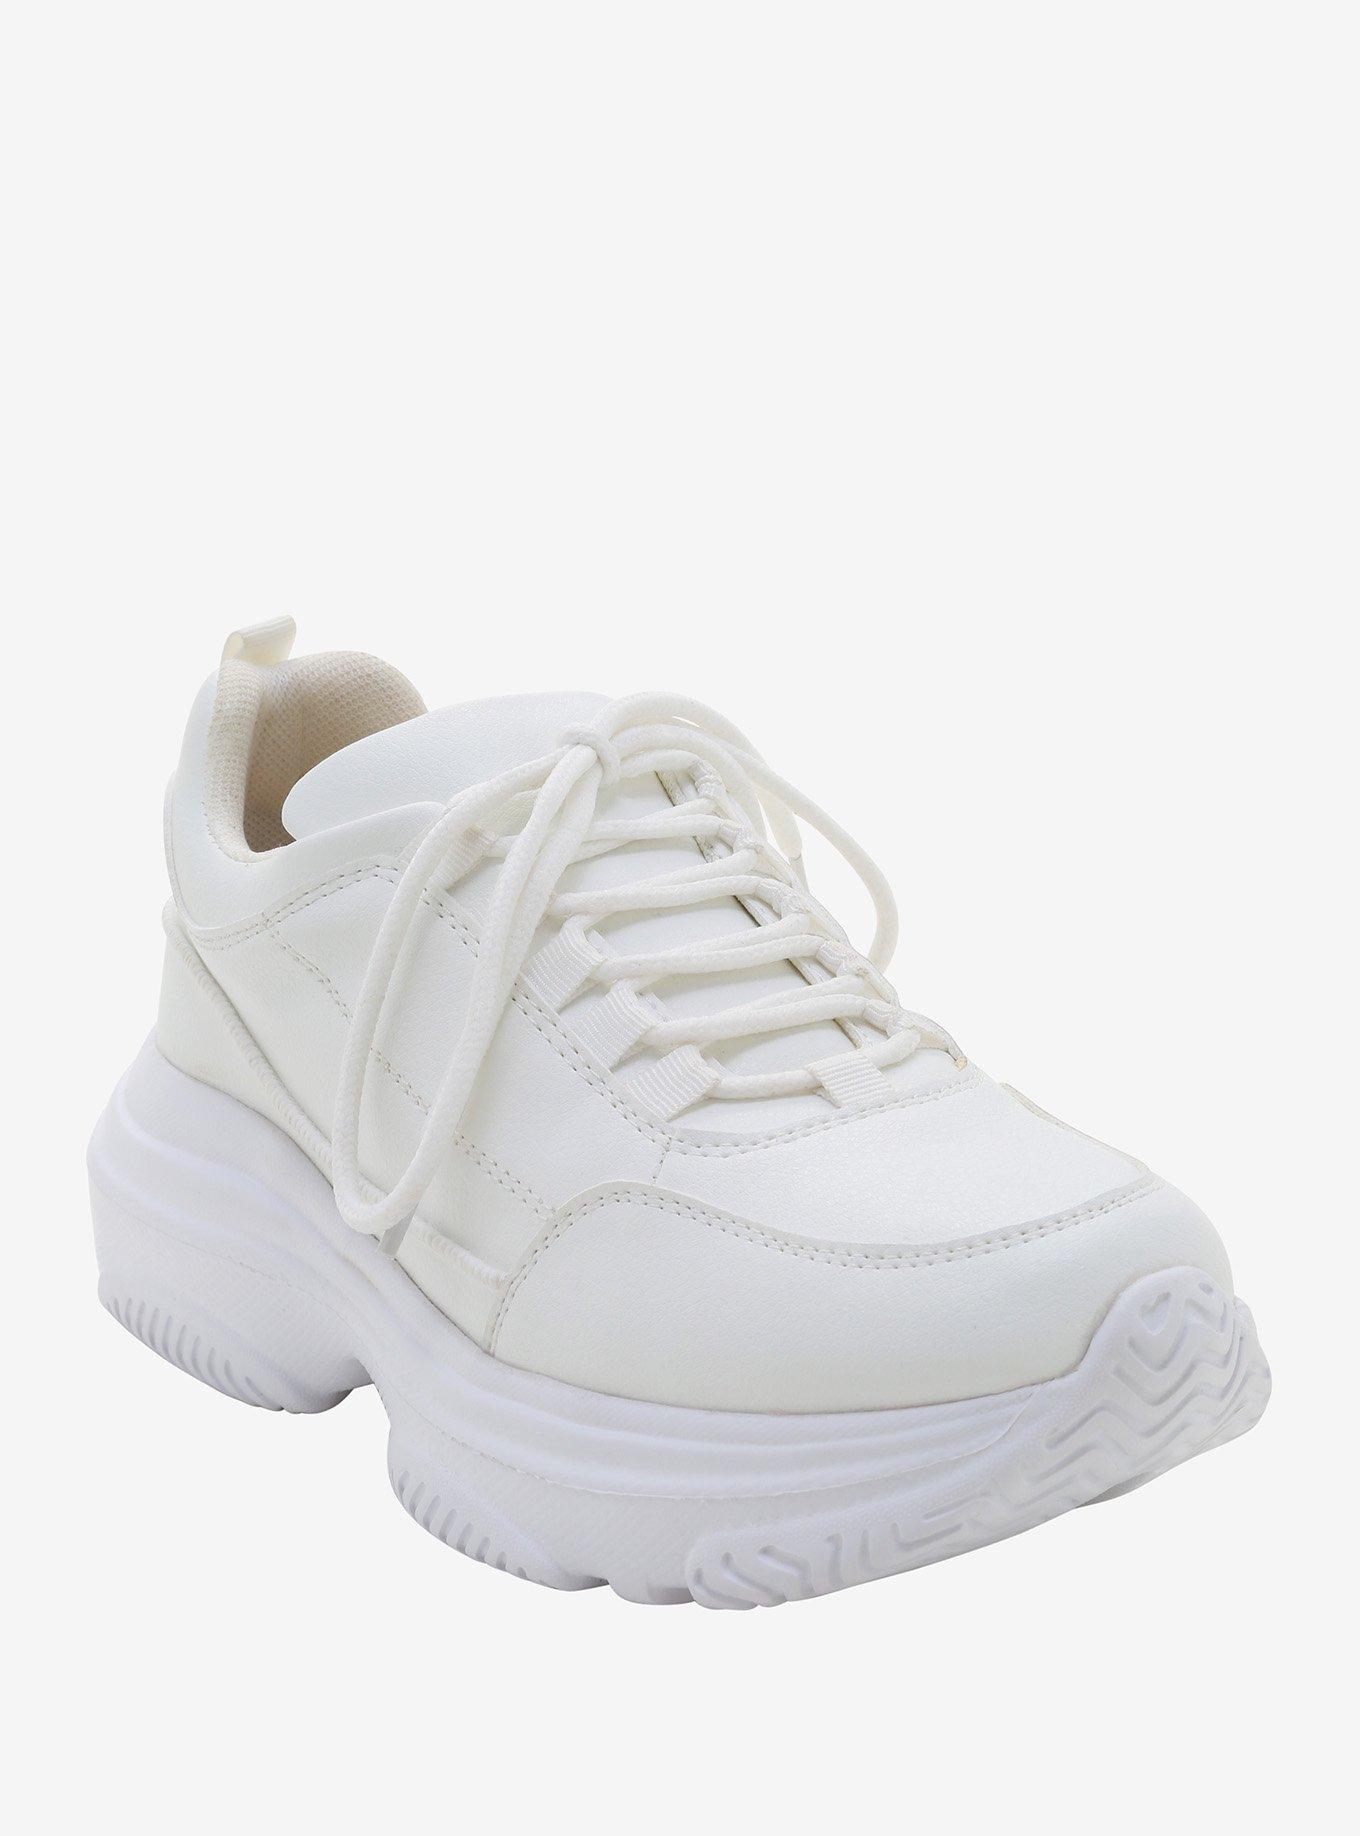 White Chunky Sneakers, WHITE, hi-res